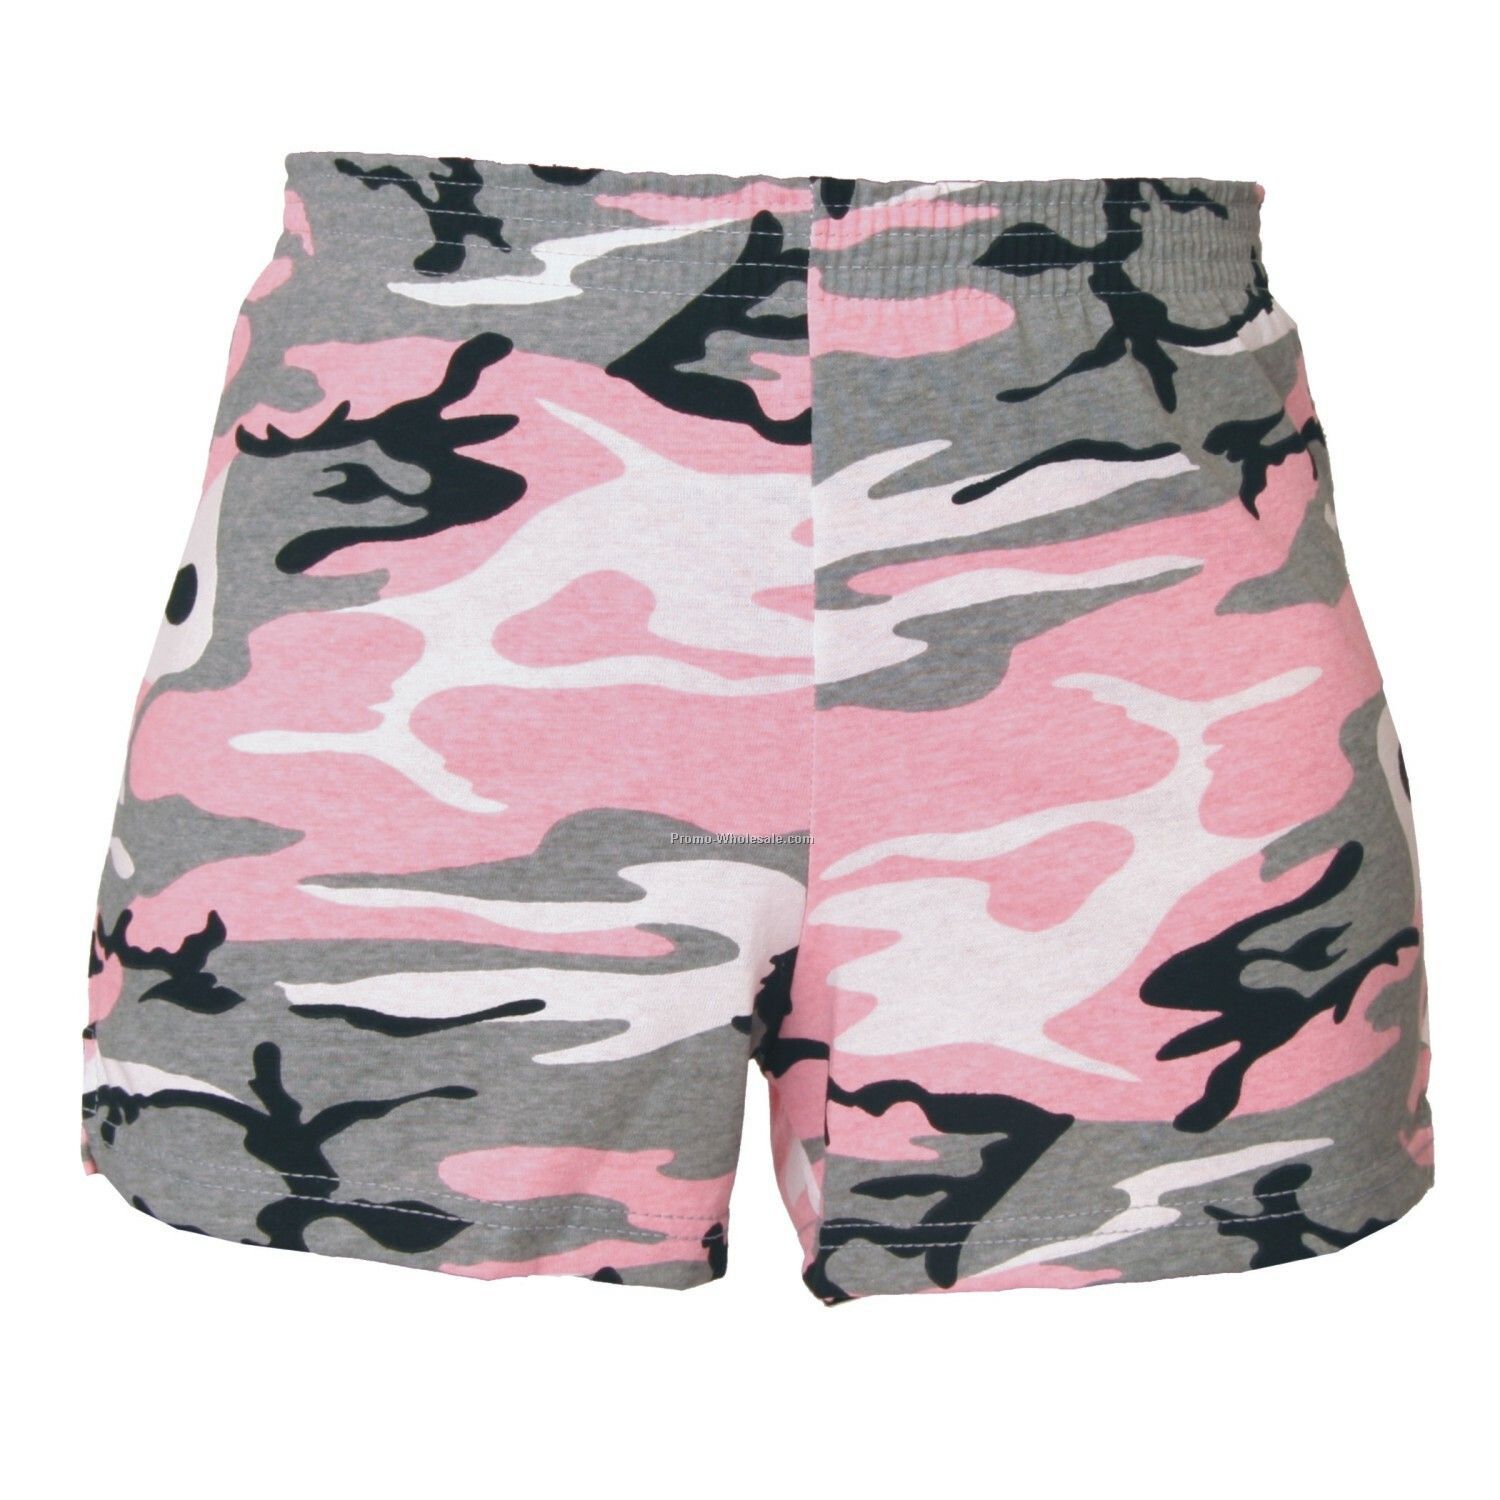 Youths' Pink Camouflage Novelty Spirit Shorts (Xs-xl)